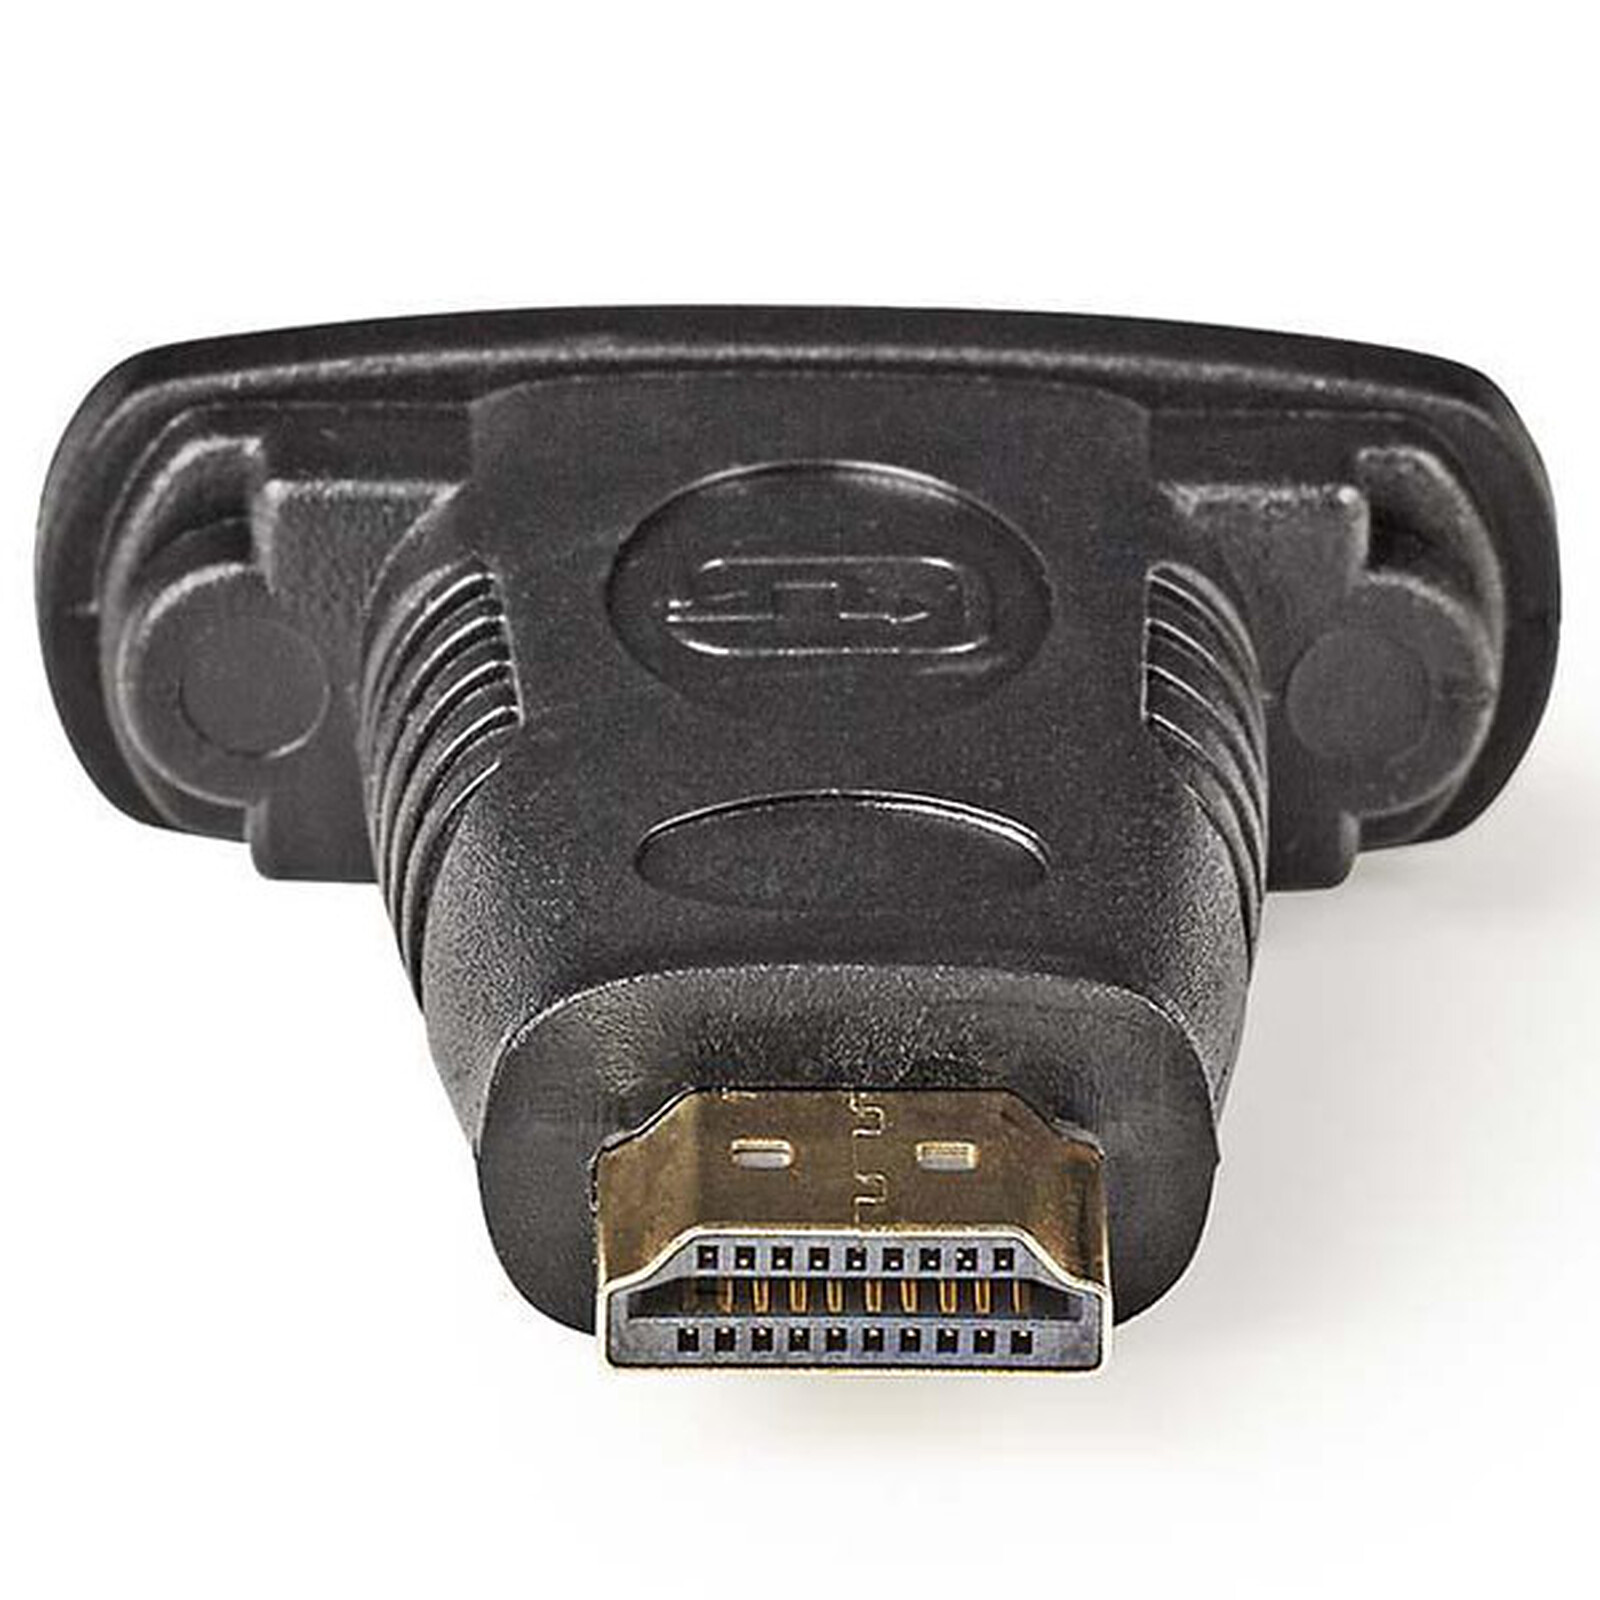 Adaptateur DVI-I Mâle / HDMI Femelle - DVI - Garantie 3 ans LDLC